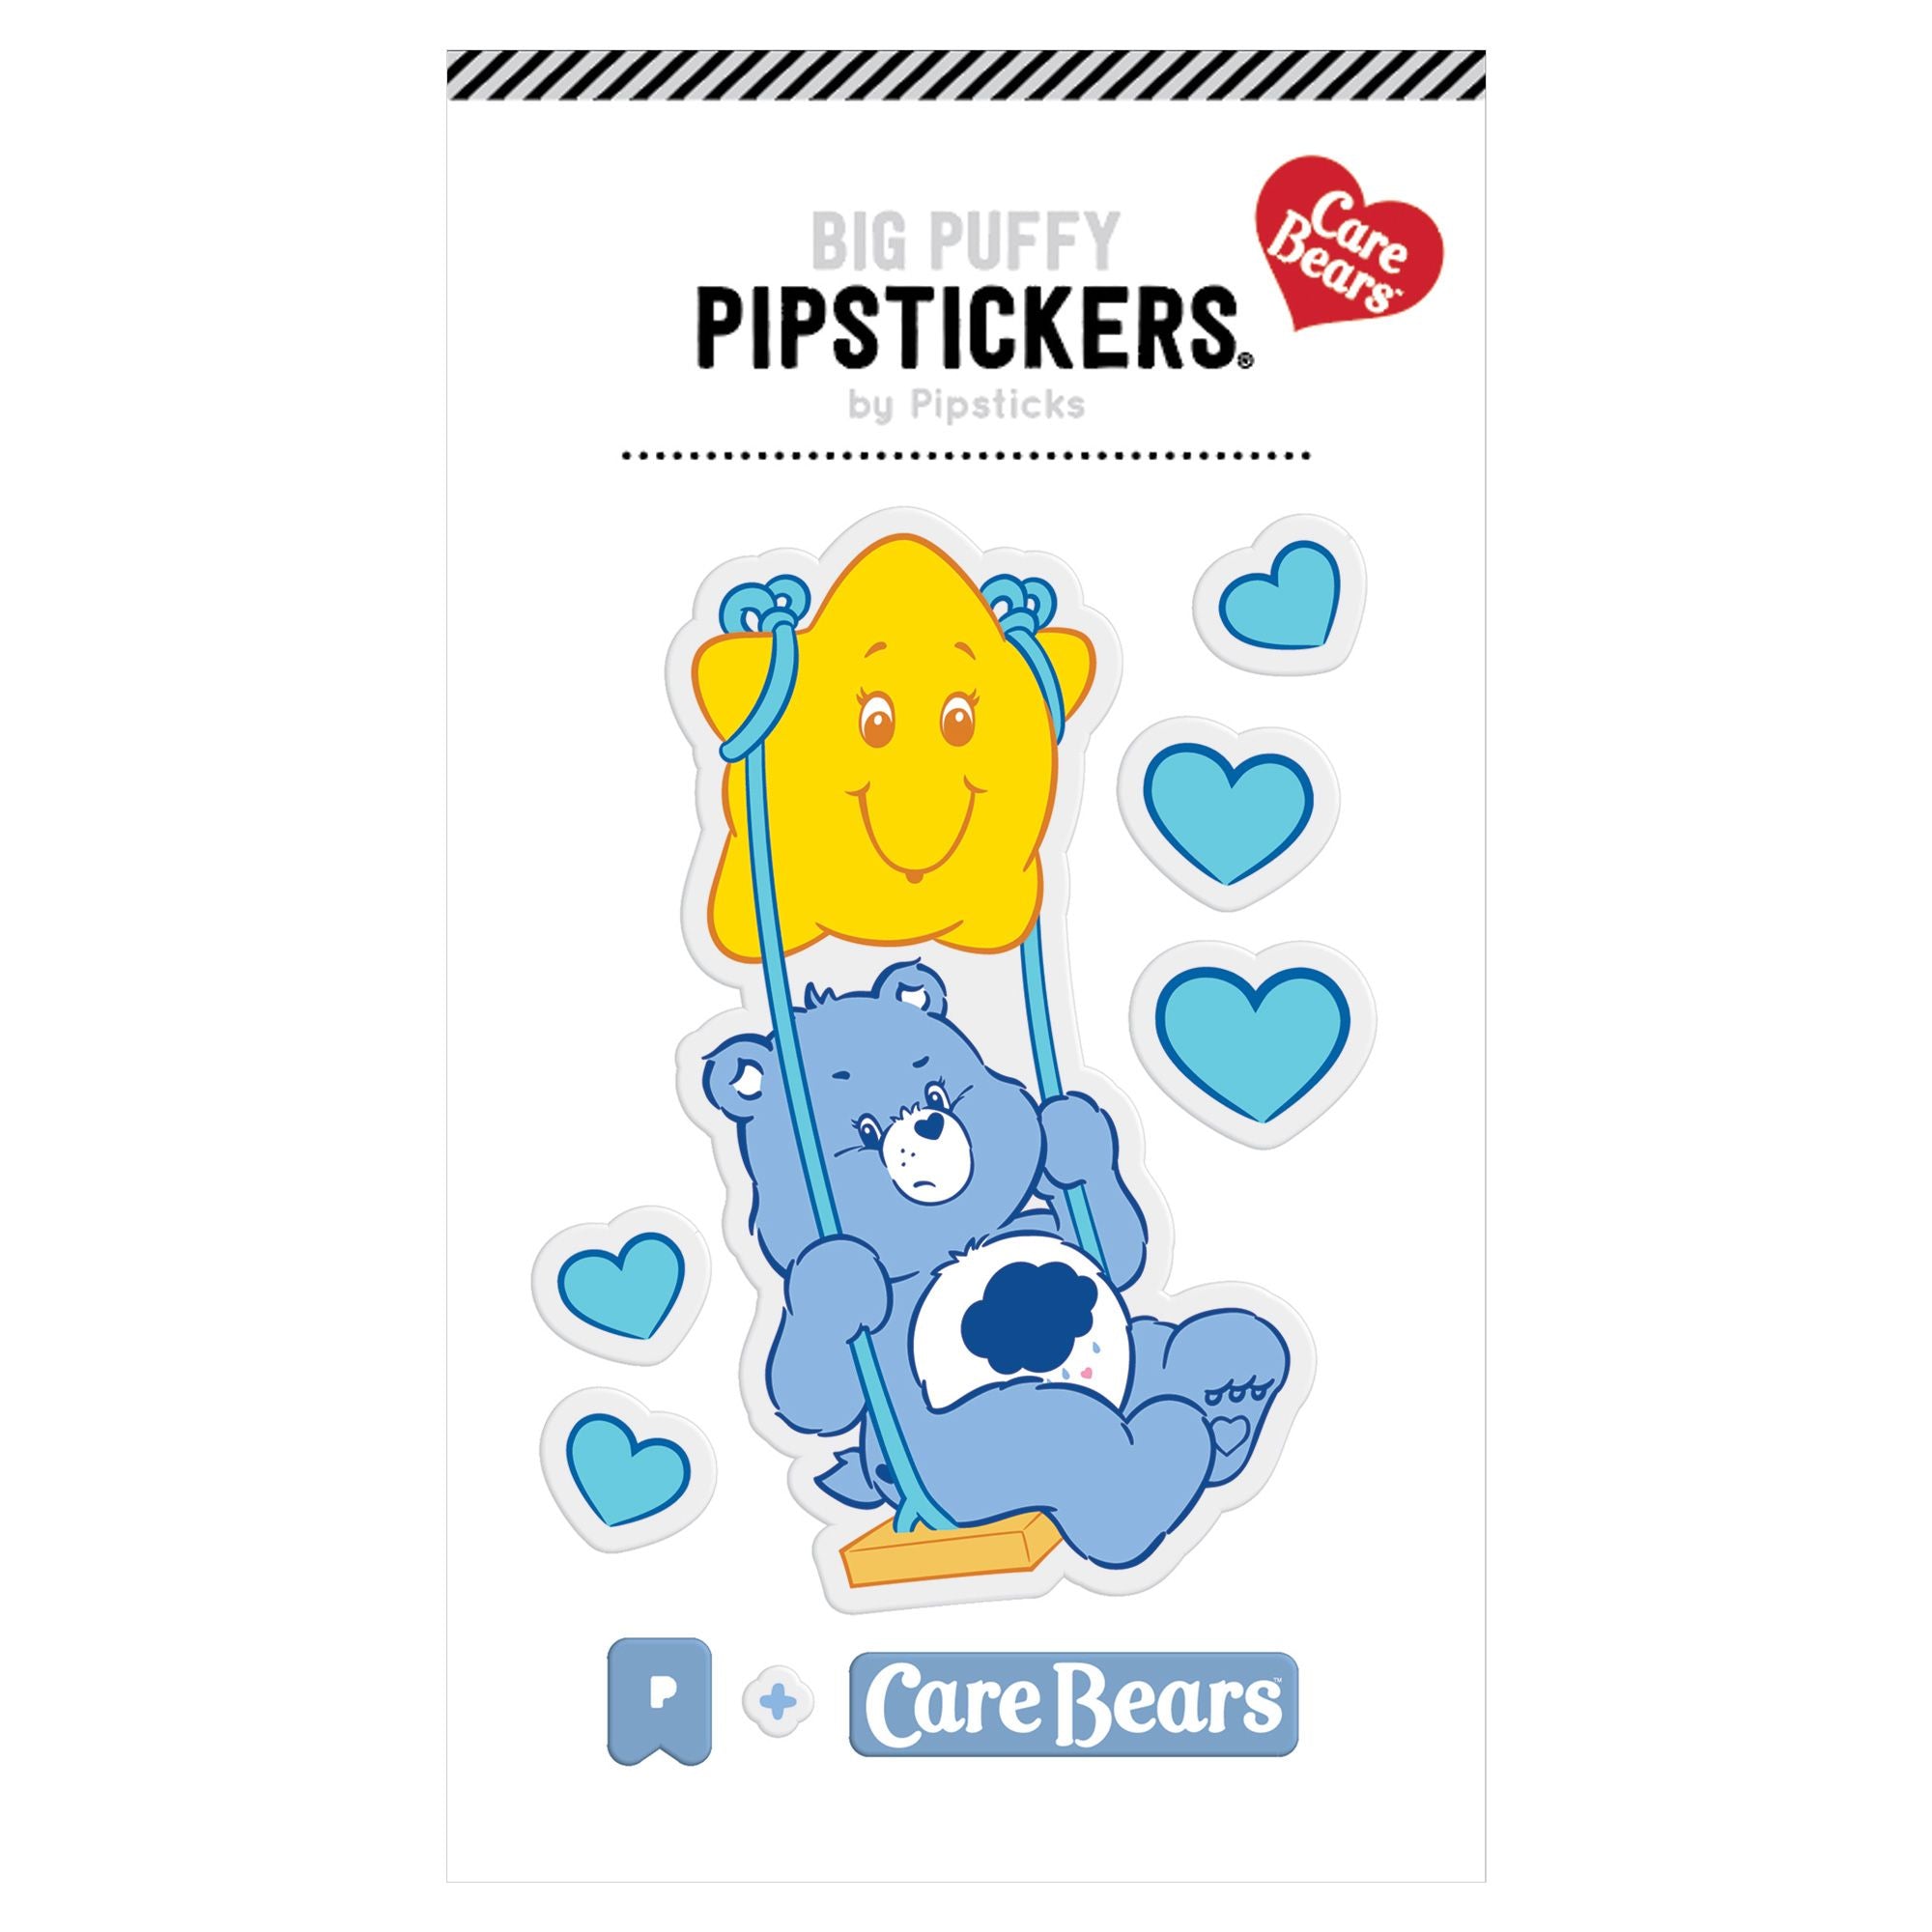 Puffy Stickers - Big, Cute Stickers!